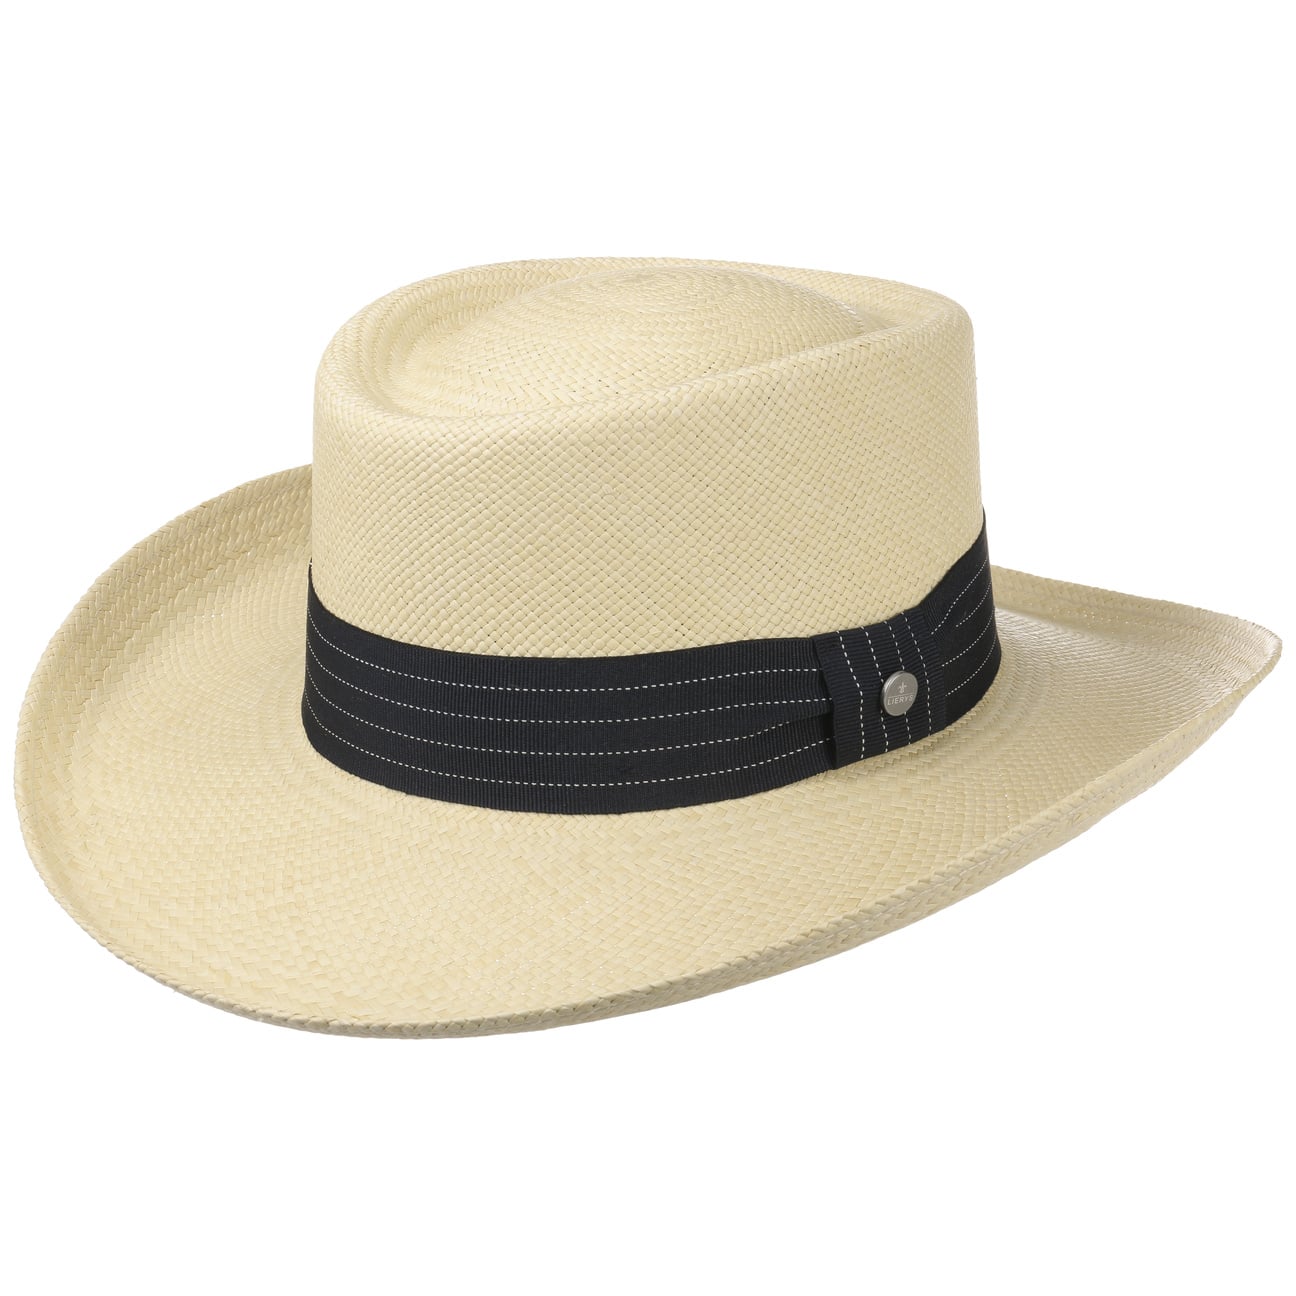 Gambler Panama Hat by Lierys -->